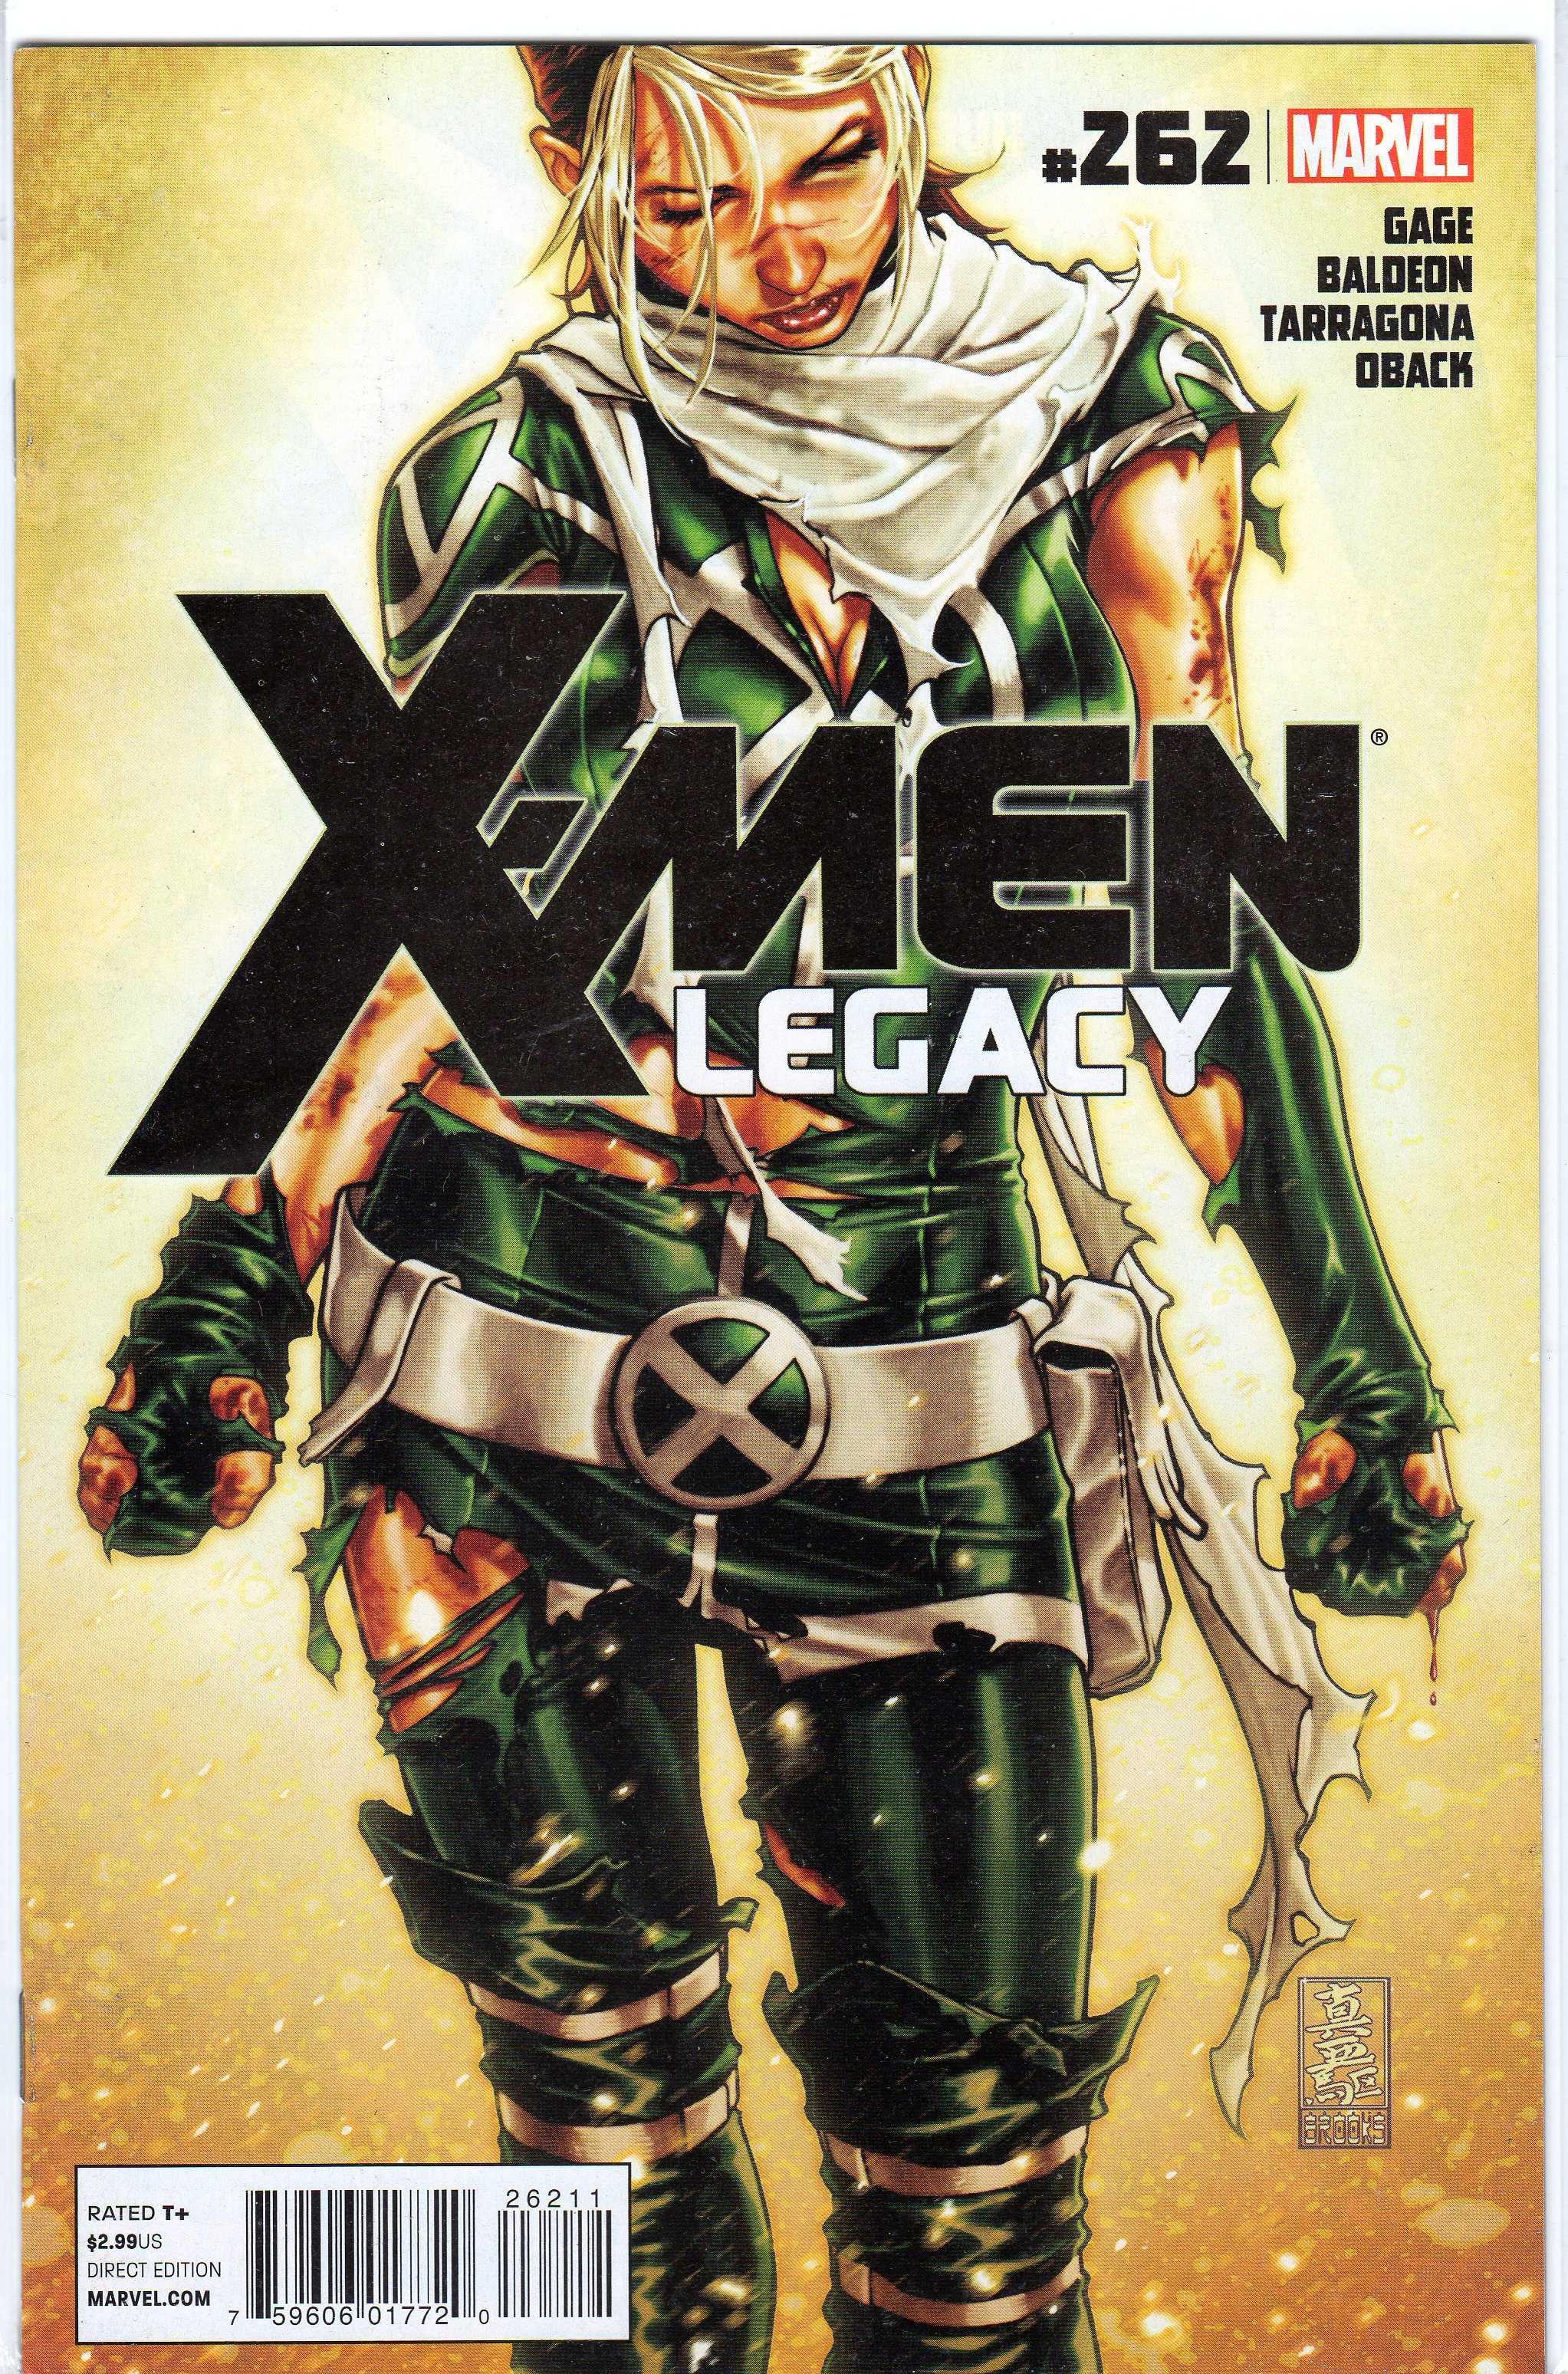 X-Men Legacy #262 benzi desenate